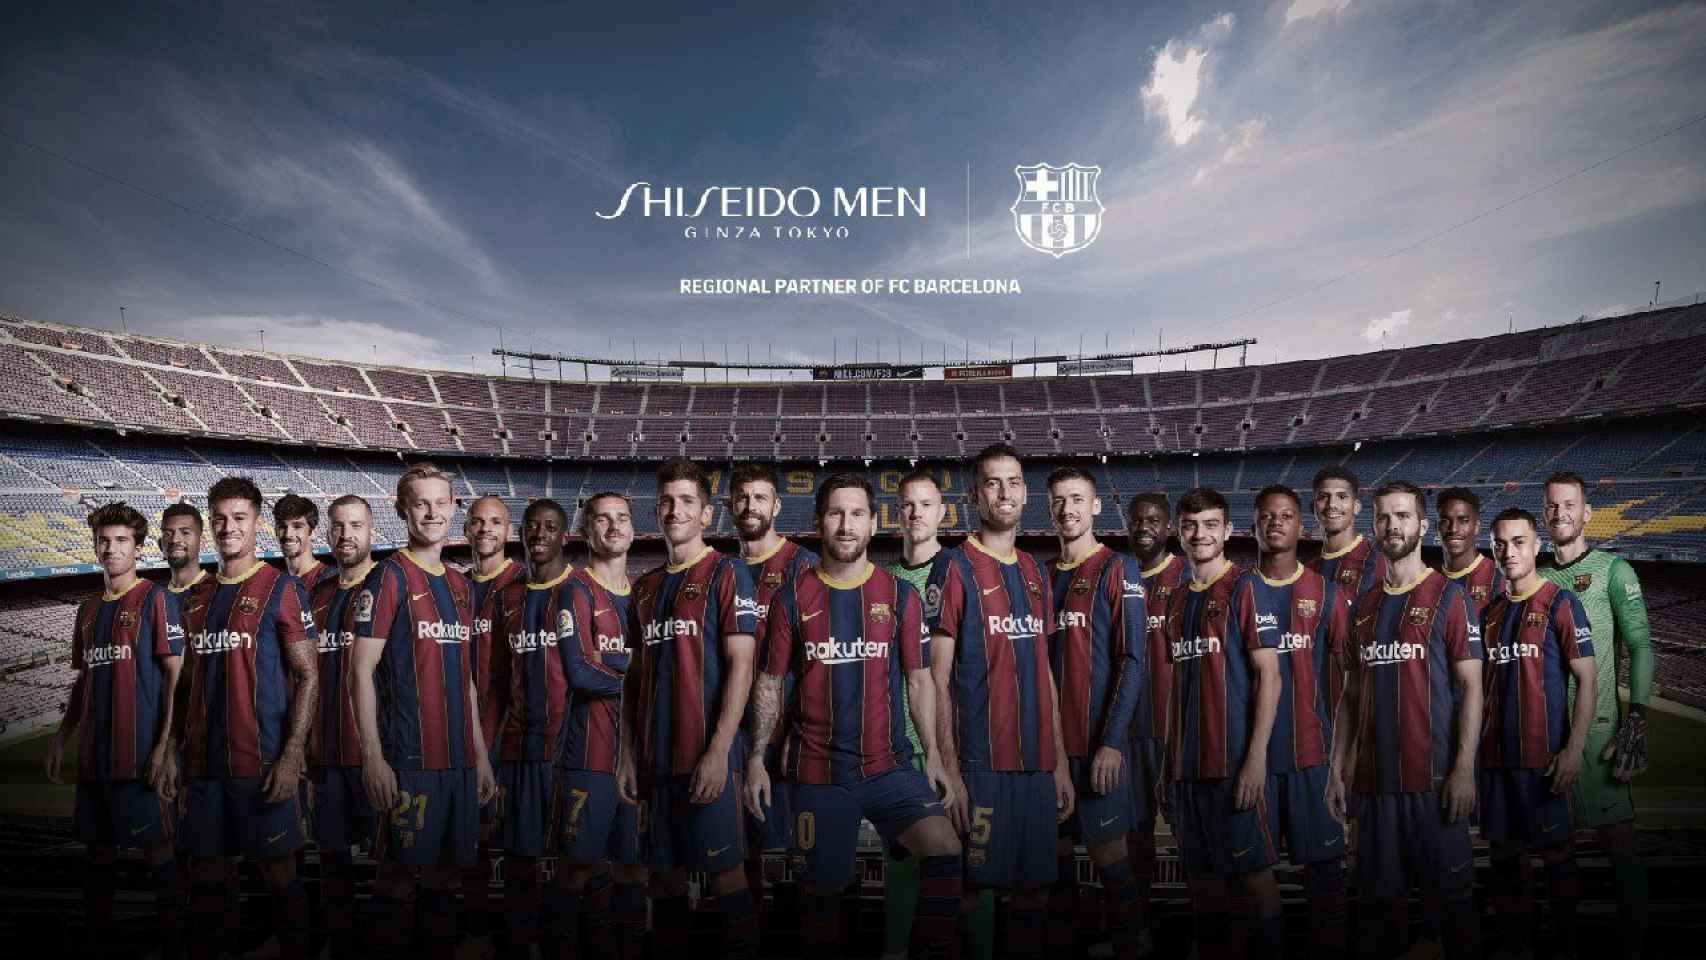 Imagen del acuerdo con la empresa Shiseido Men / FC Barcelona